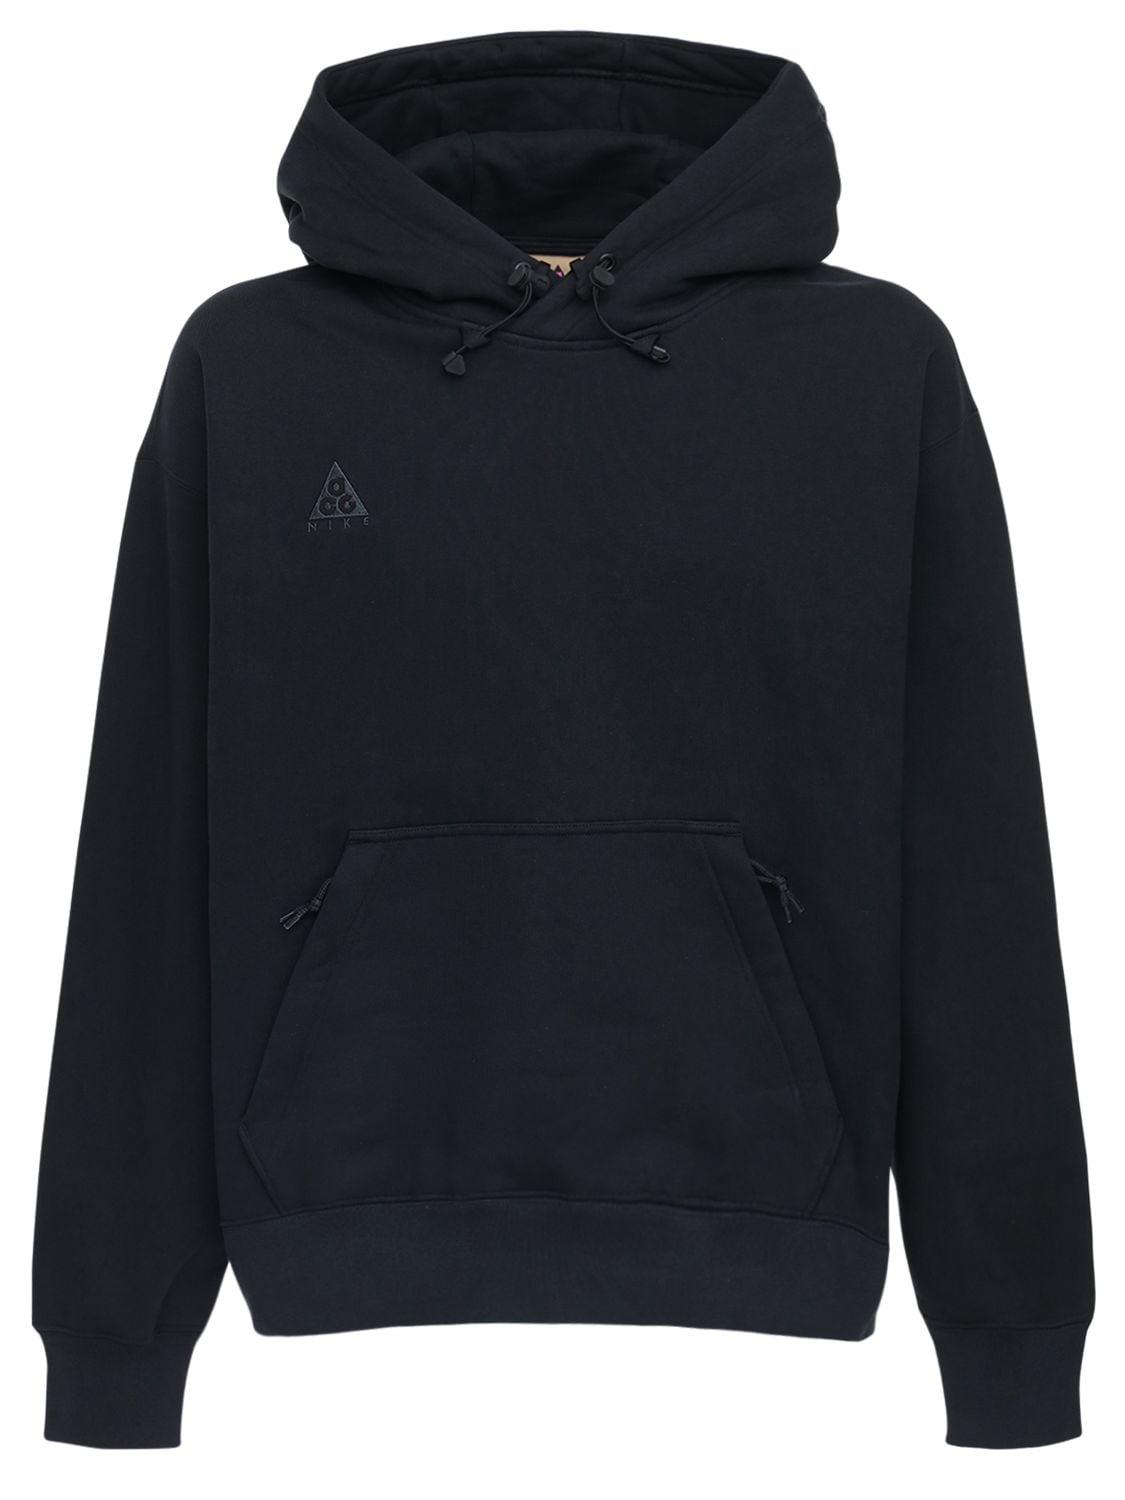 Nike Fleece Acg Pullover Hoodie (black) for Men - Save 16% - Lyst